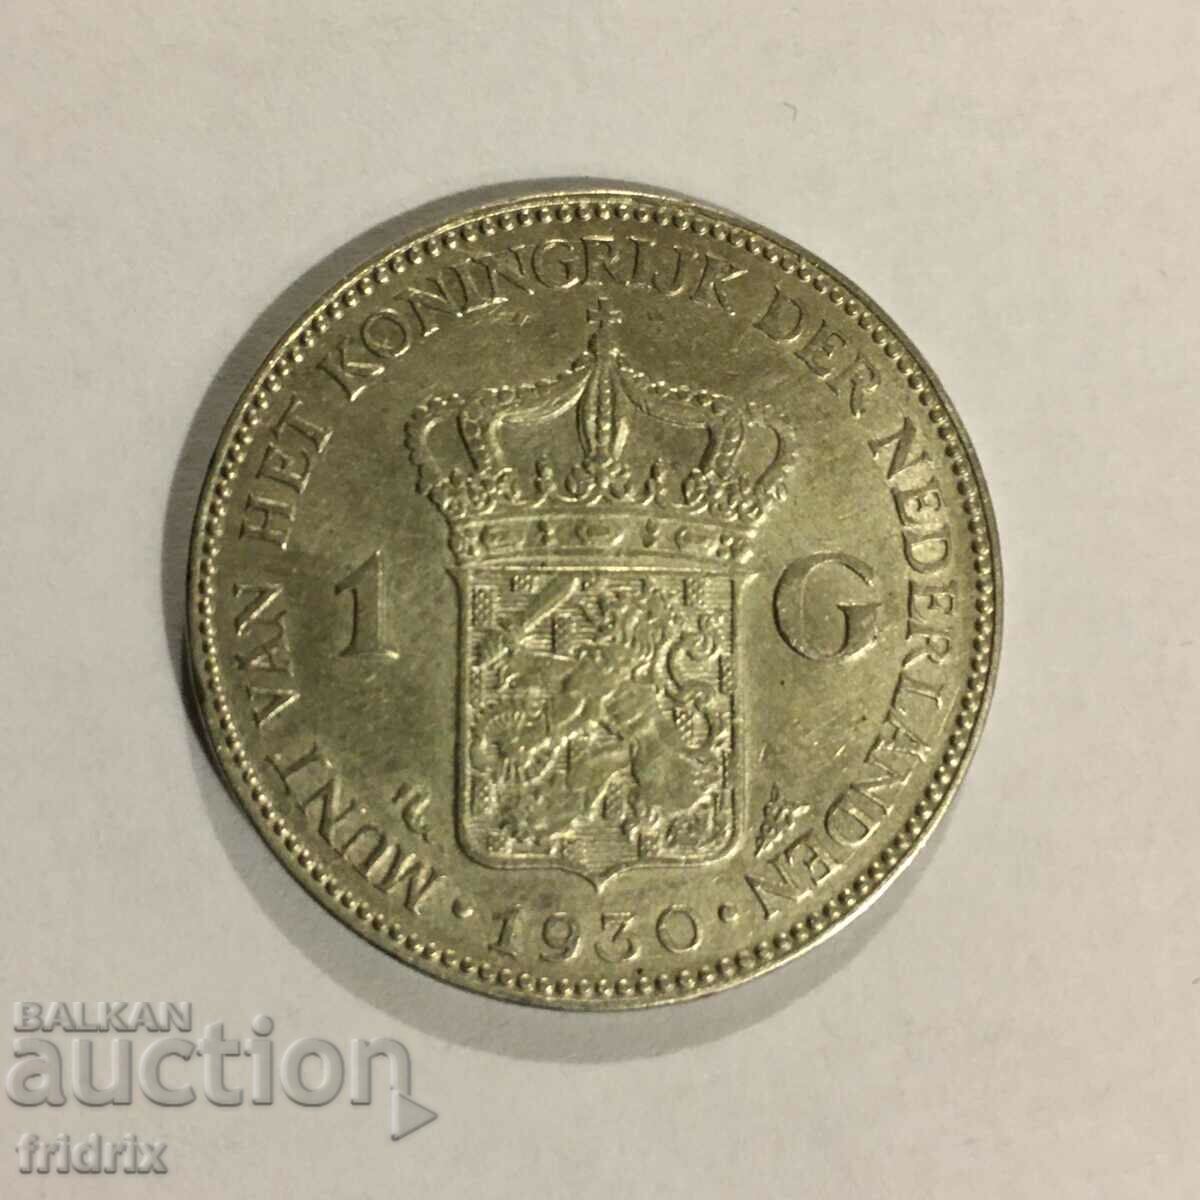 Нидерландия 1 гулден 1930 / Netherlands 1 gulden 1930